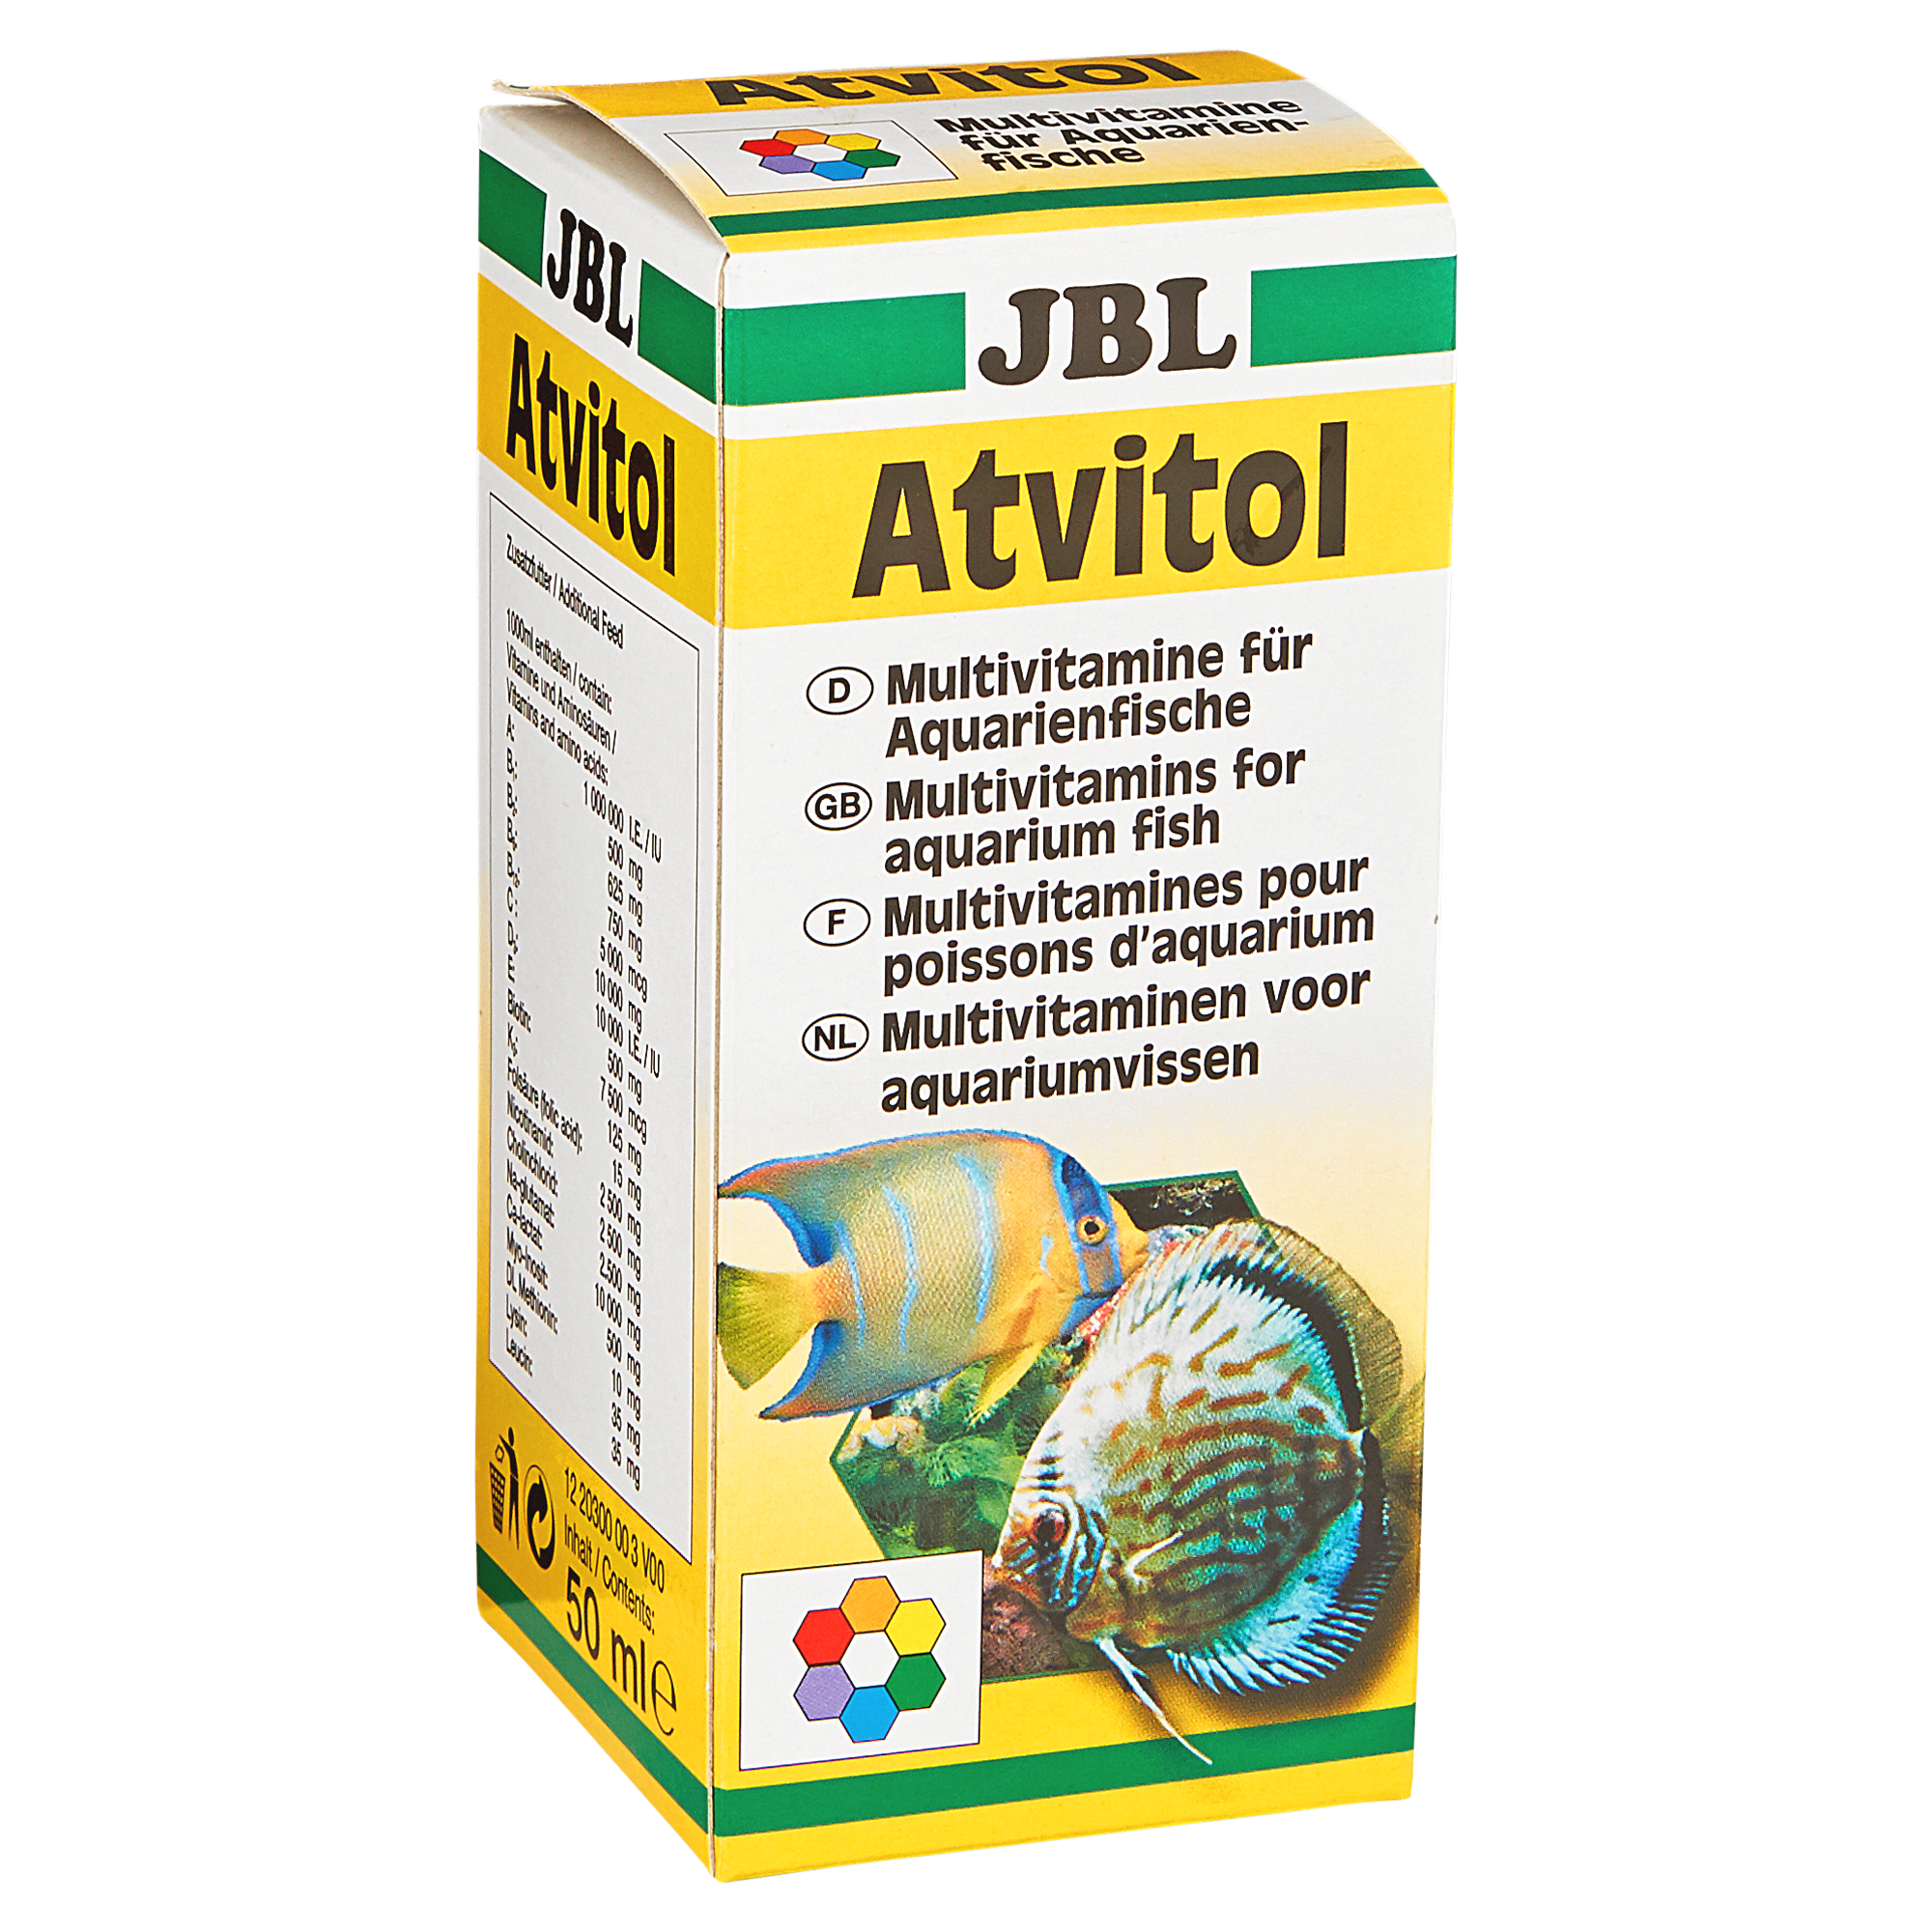 Multivitamine für Aquarienfische "Atvitol" 50 ml + product picture